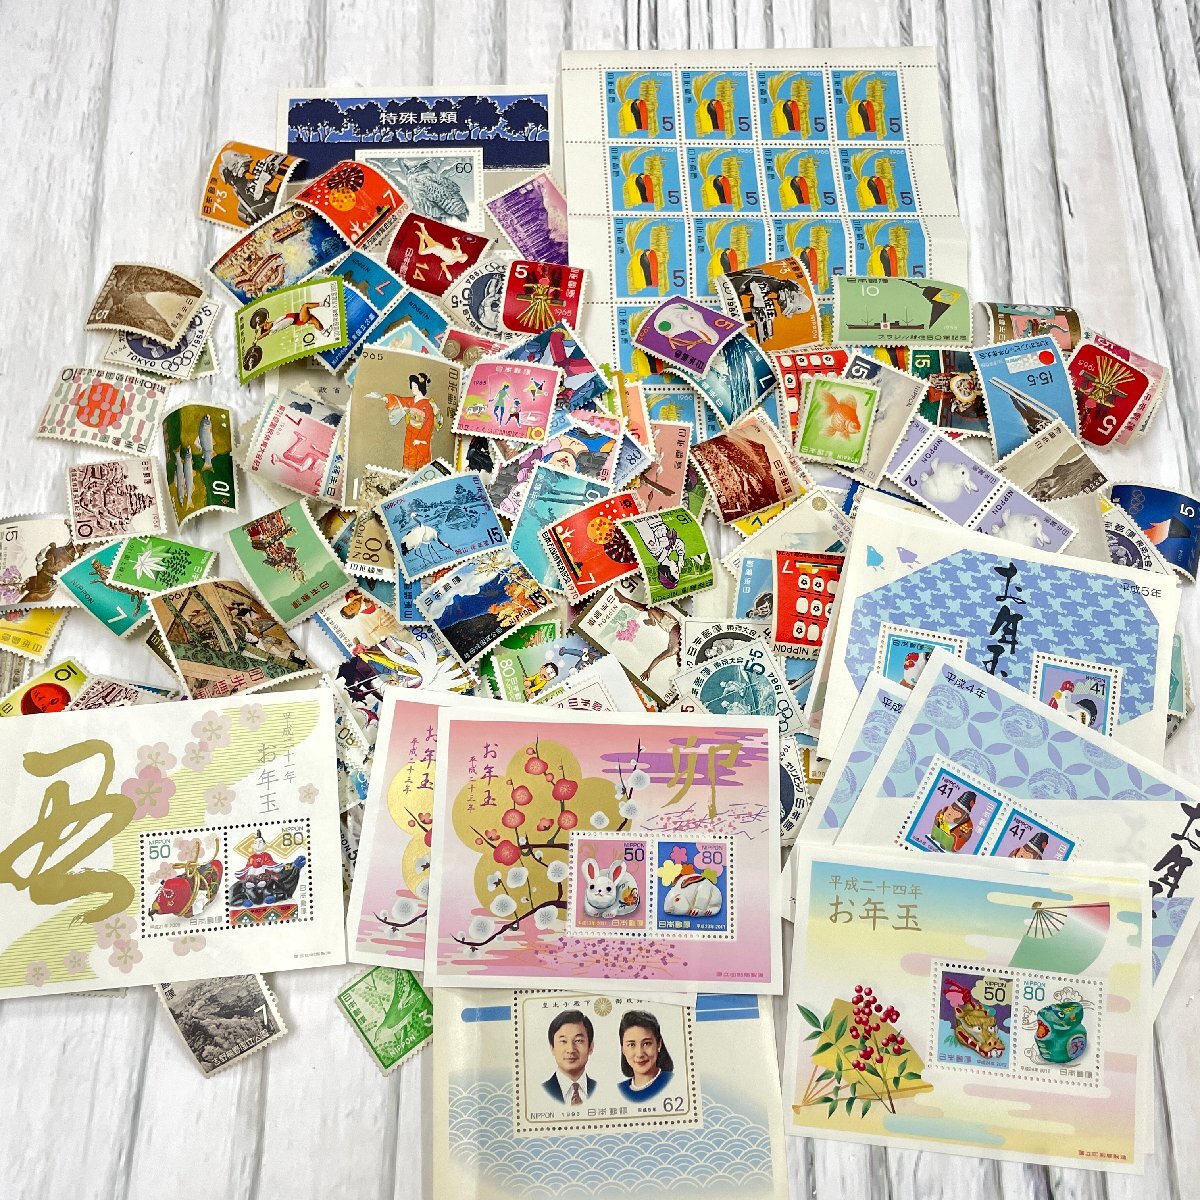 m002 H8 1 送料無料 未使用 バラ 切手 1万円分 額面10,000円分 まとめて 日本切手 郵便 記念切手の画像1